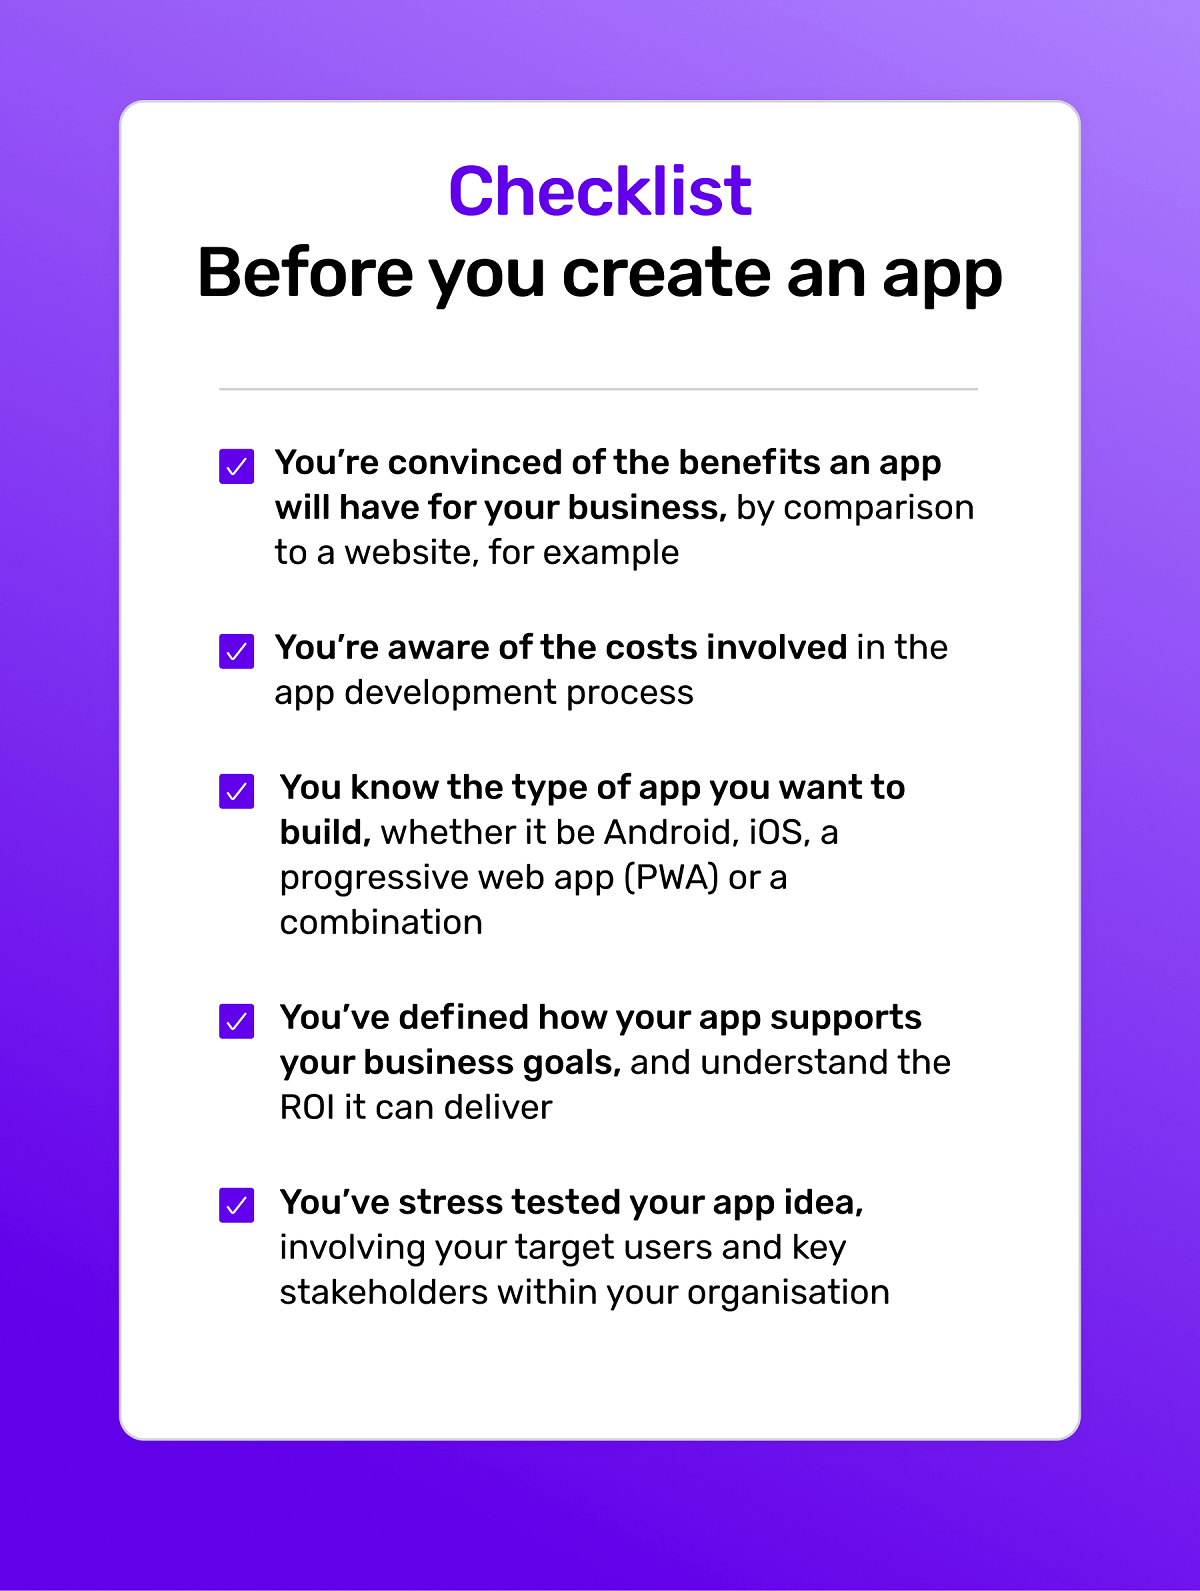 Checklist - before creating an app